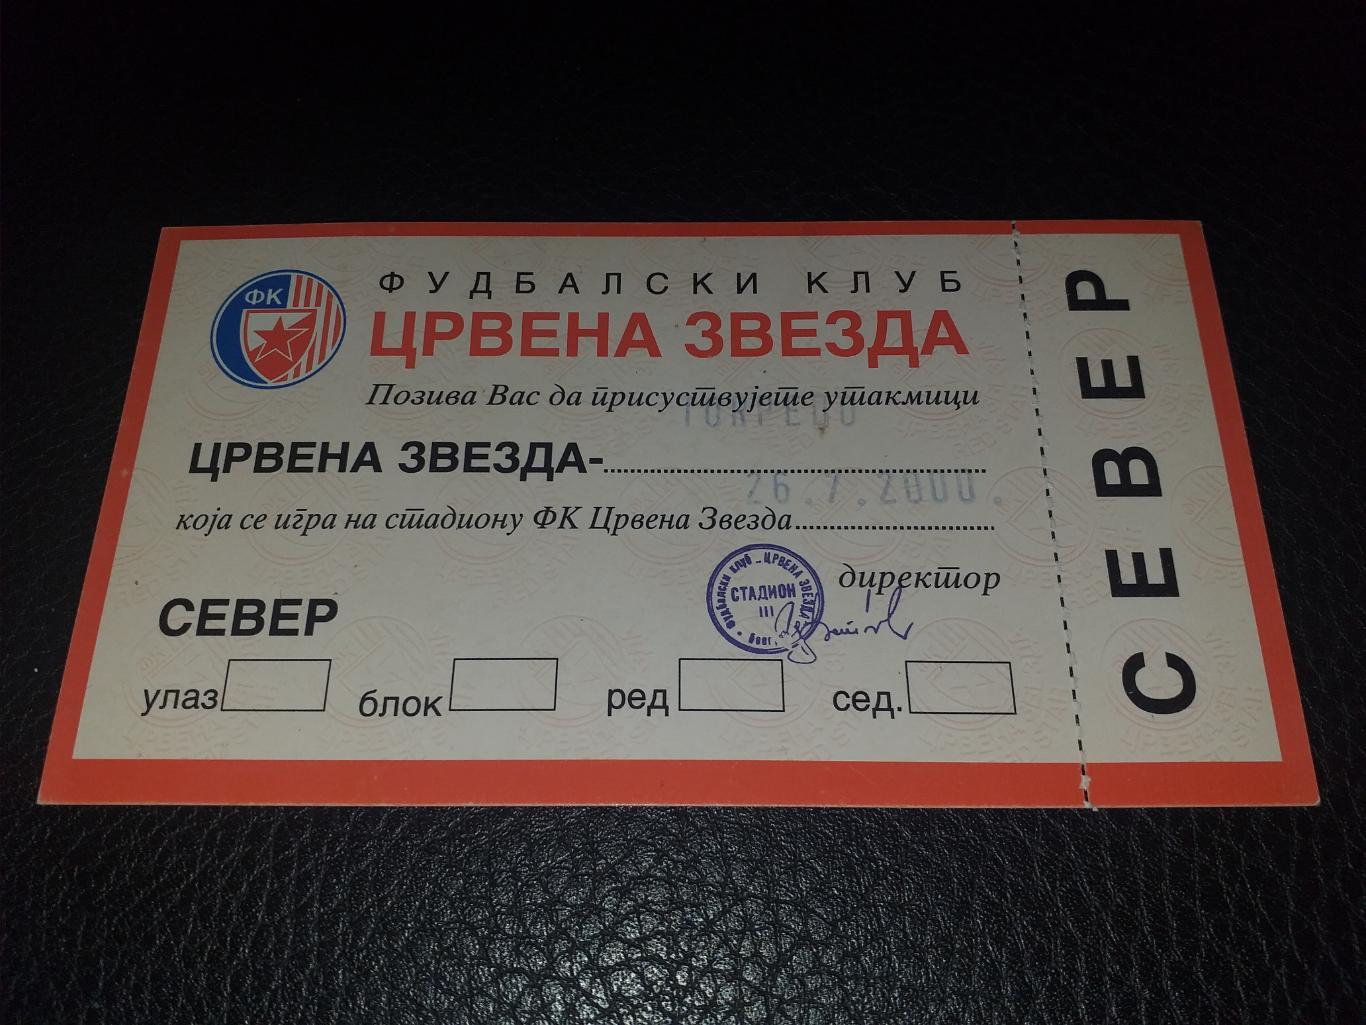 Црвена звезда Белград (Сербия) - Торпедо Кутаиси (Грузия) 26.07.2000. Билет